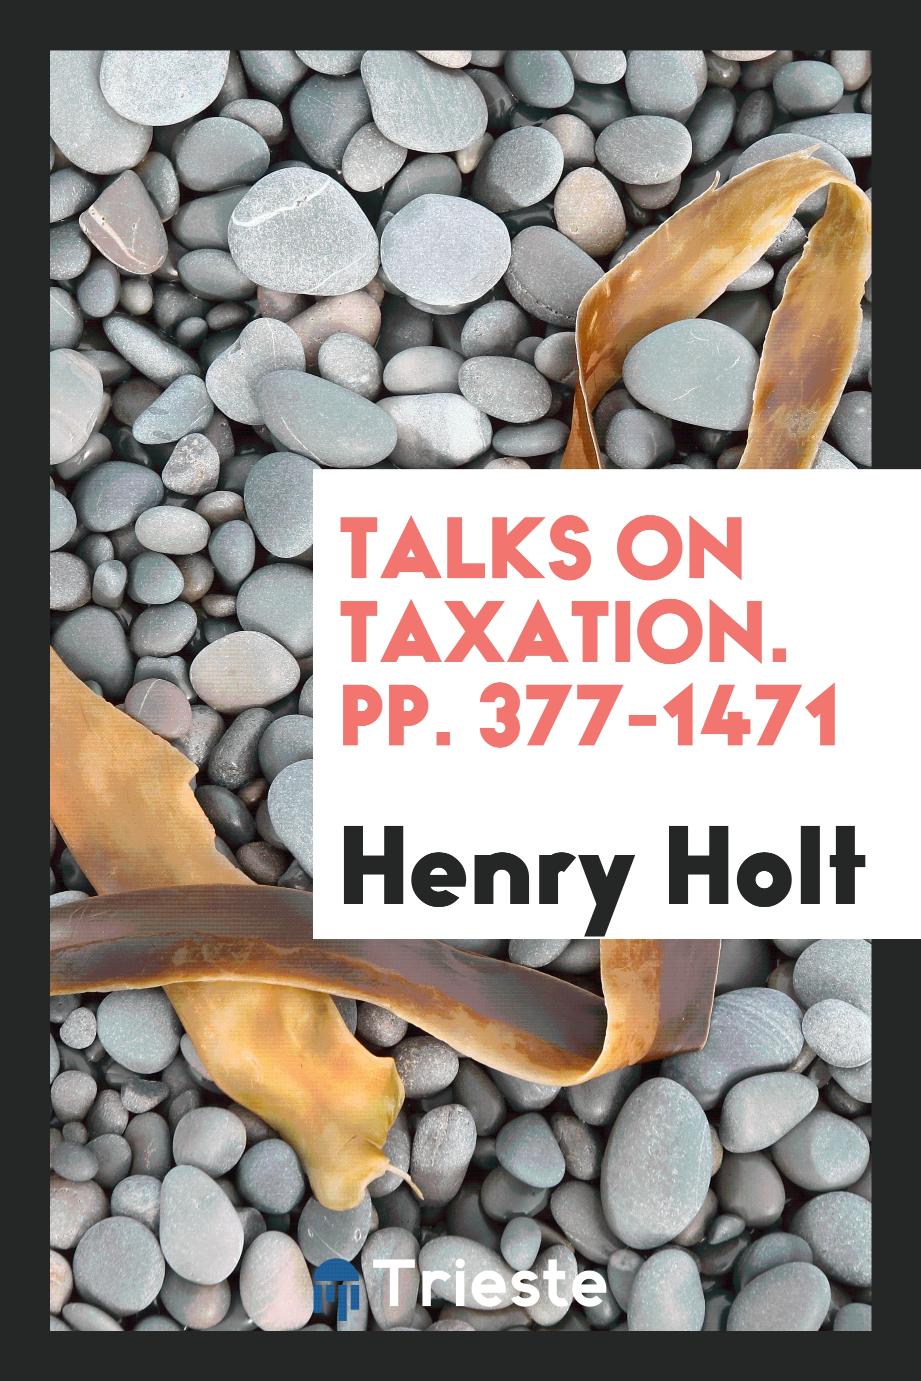 Talks on Taxation. pp. 377-1471